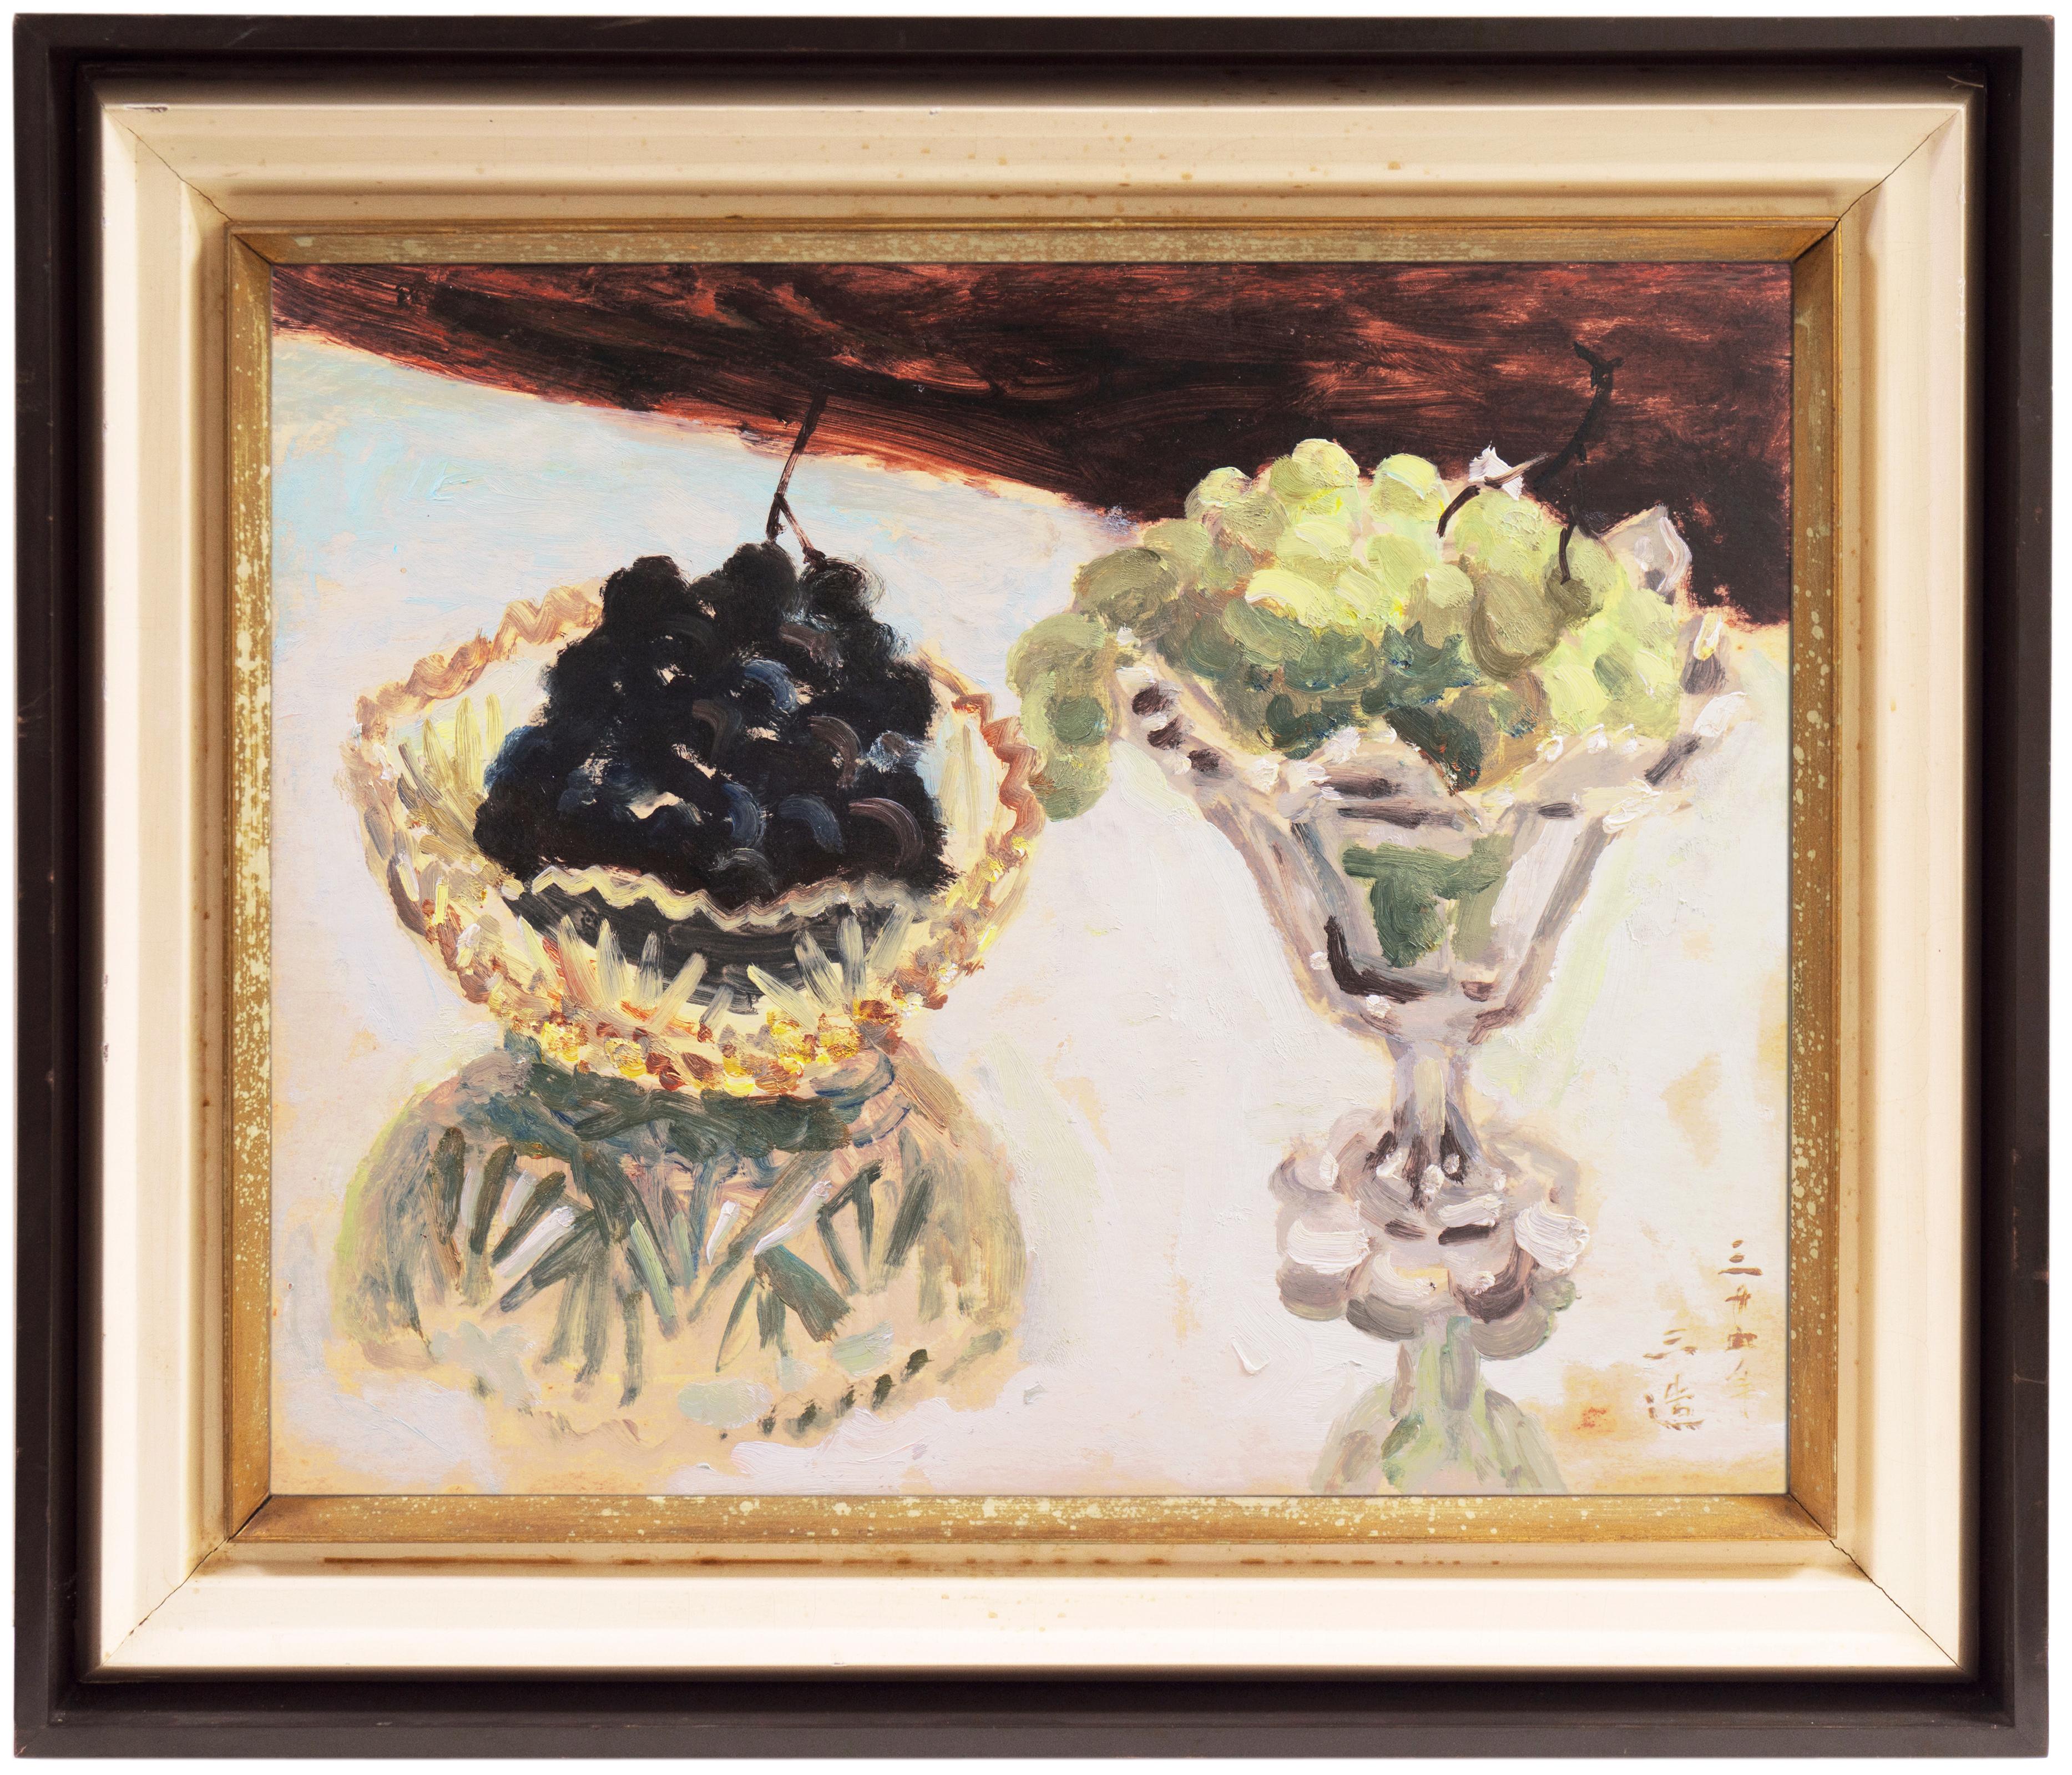 Sanzo Wada Interior Painting - 'Still Life of Green and Black Grapes', Tokyo School of Fine Arts, Academy Award